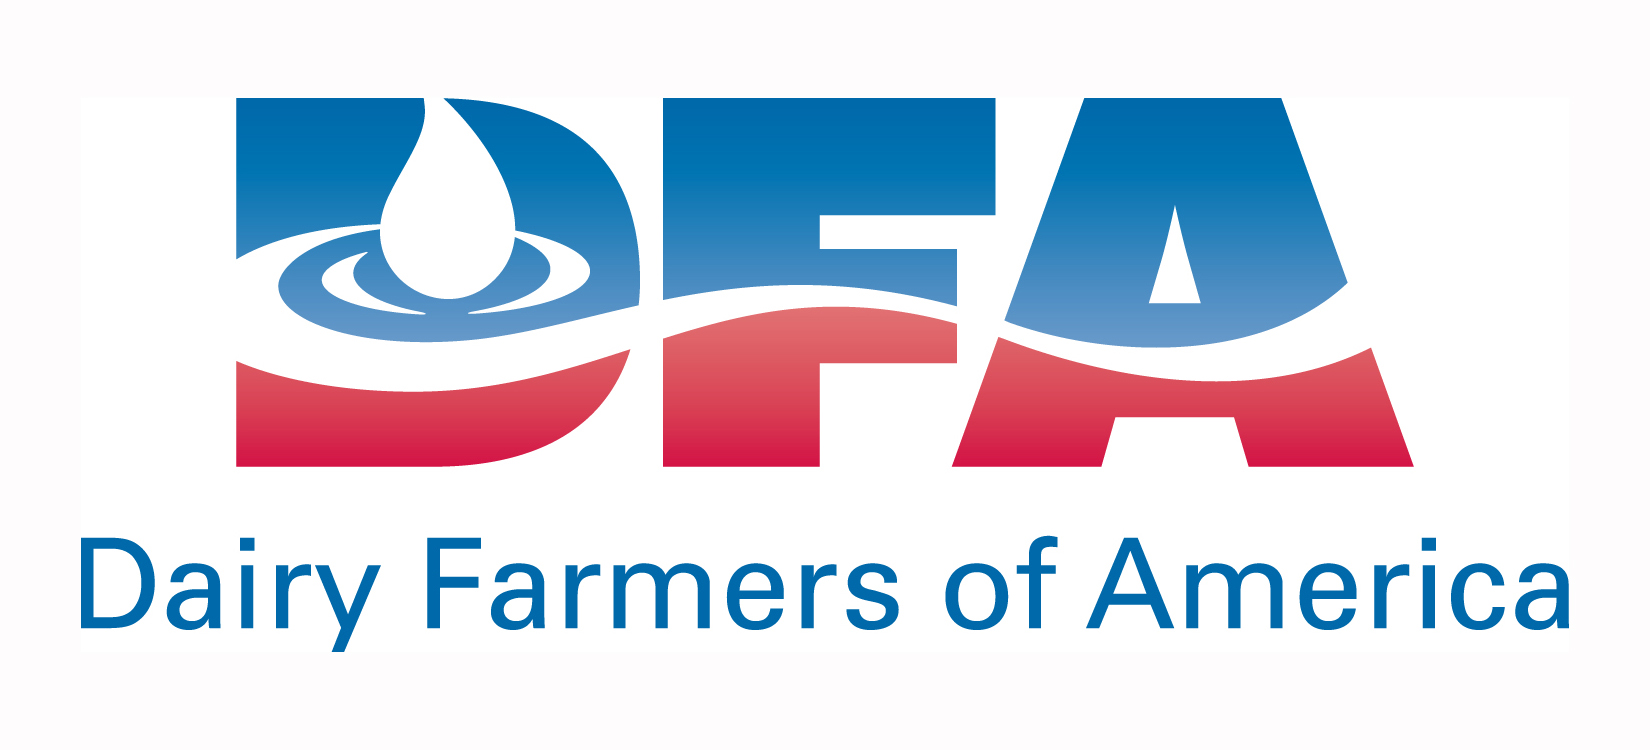 3 Dairy Farmers of America (DFA)